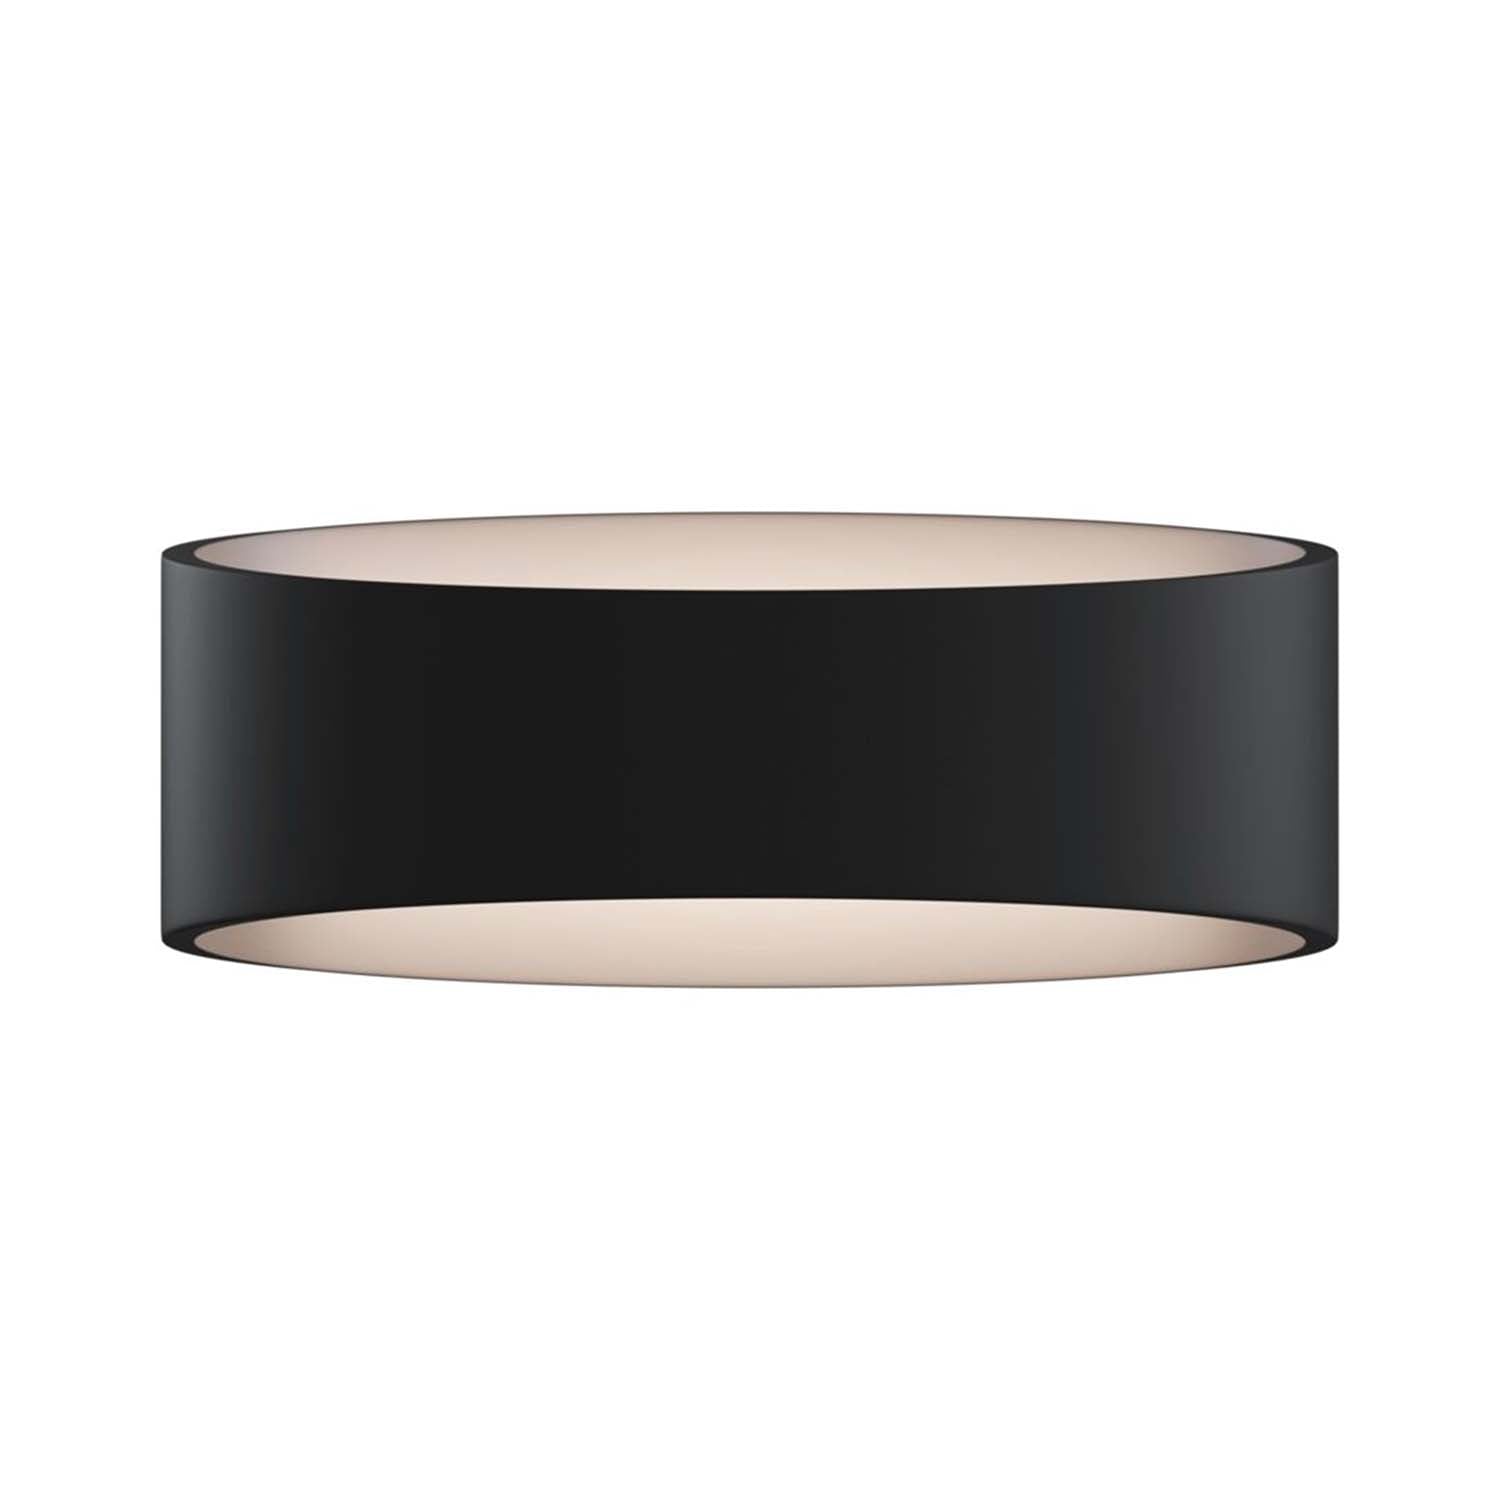 TRAME - Elliptical design wall light in white or black steel